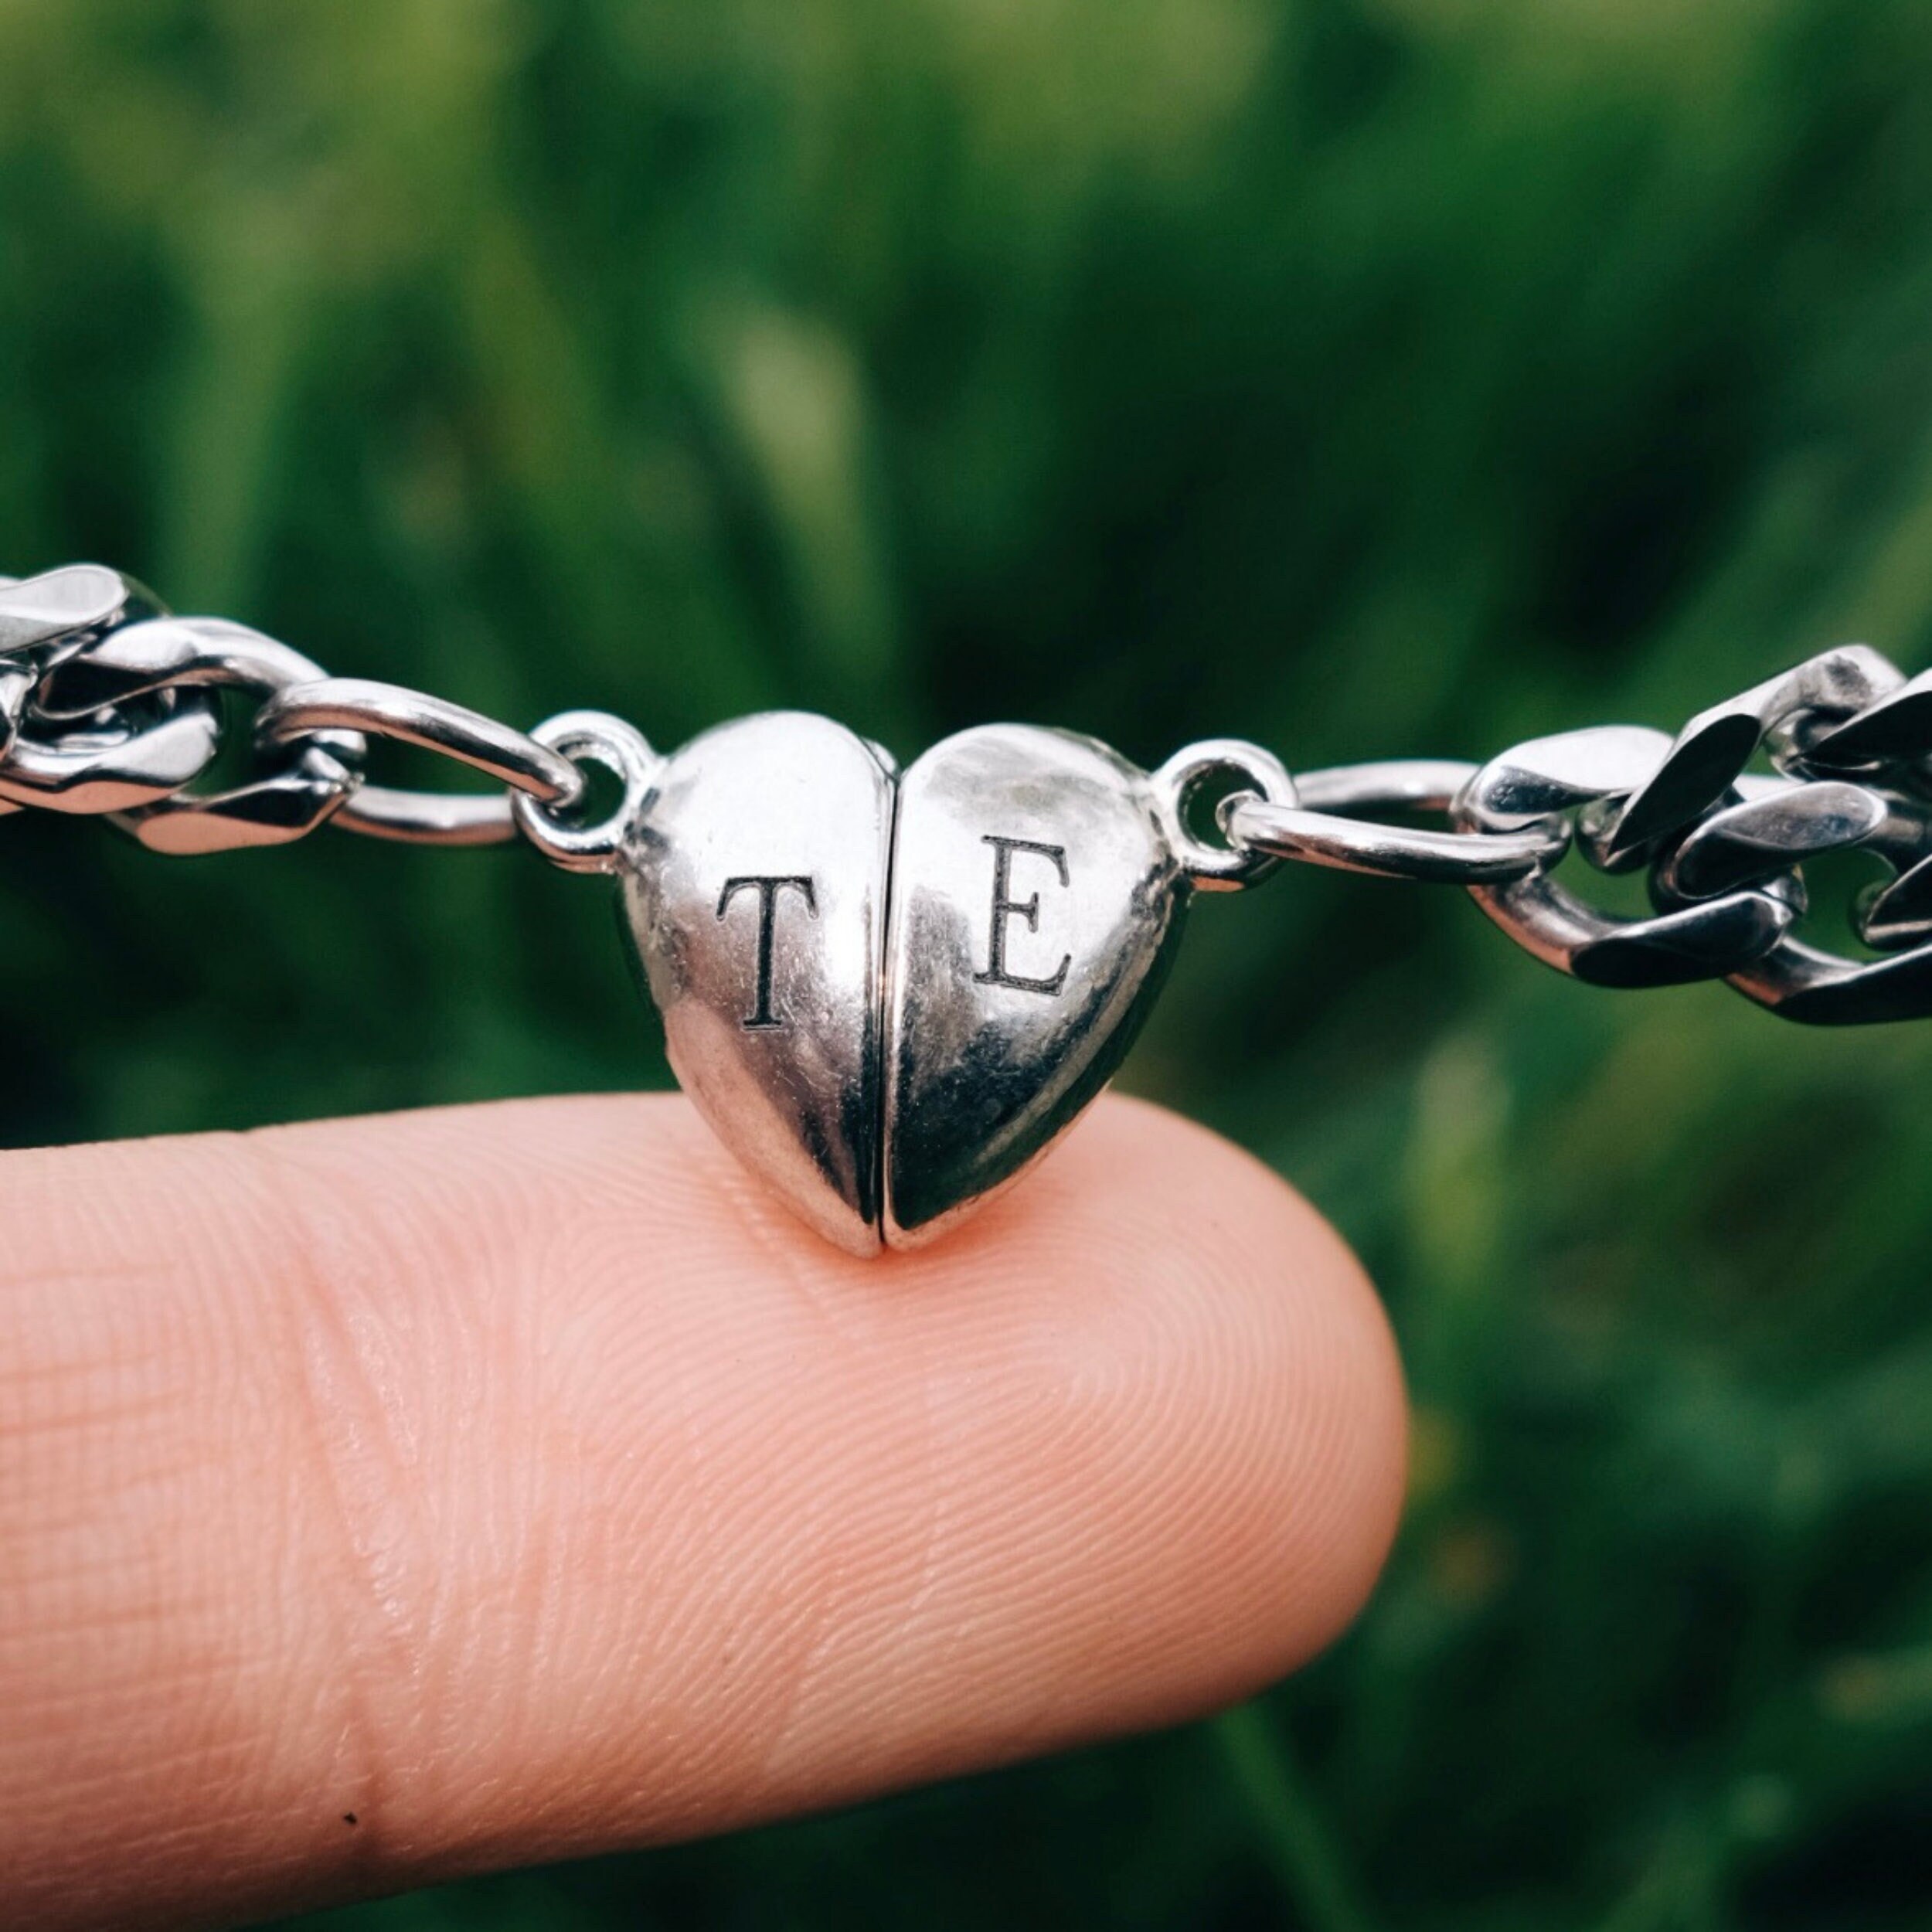 Magnetic Heart Couple Chain Bracelet-matching Magnetic Charm Bracelet-long  Distance Relationship Jewelry-trendy Best Friend Gift Idea -  Israel